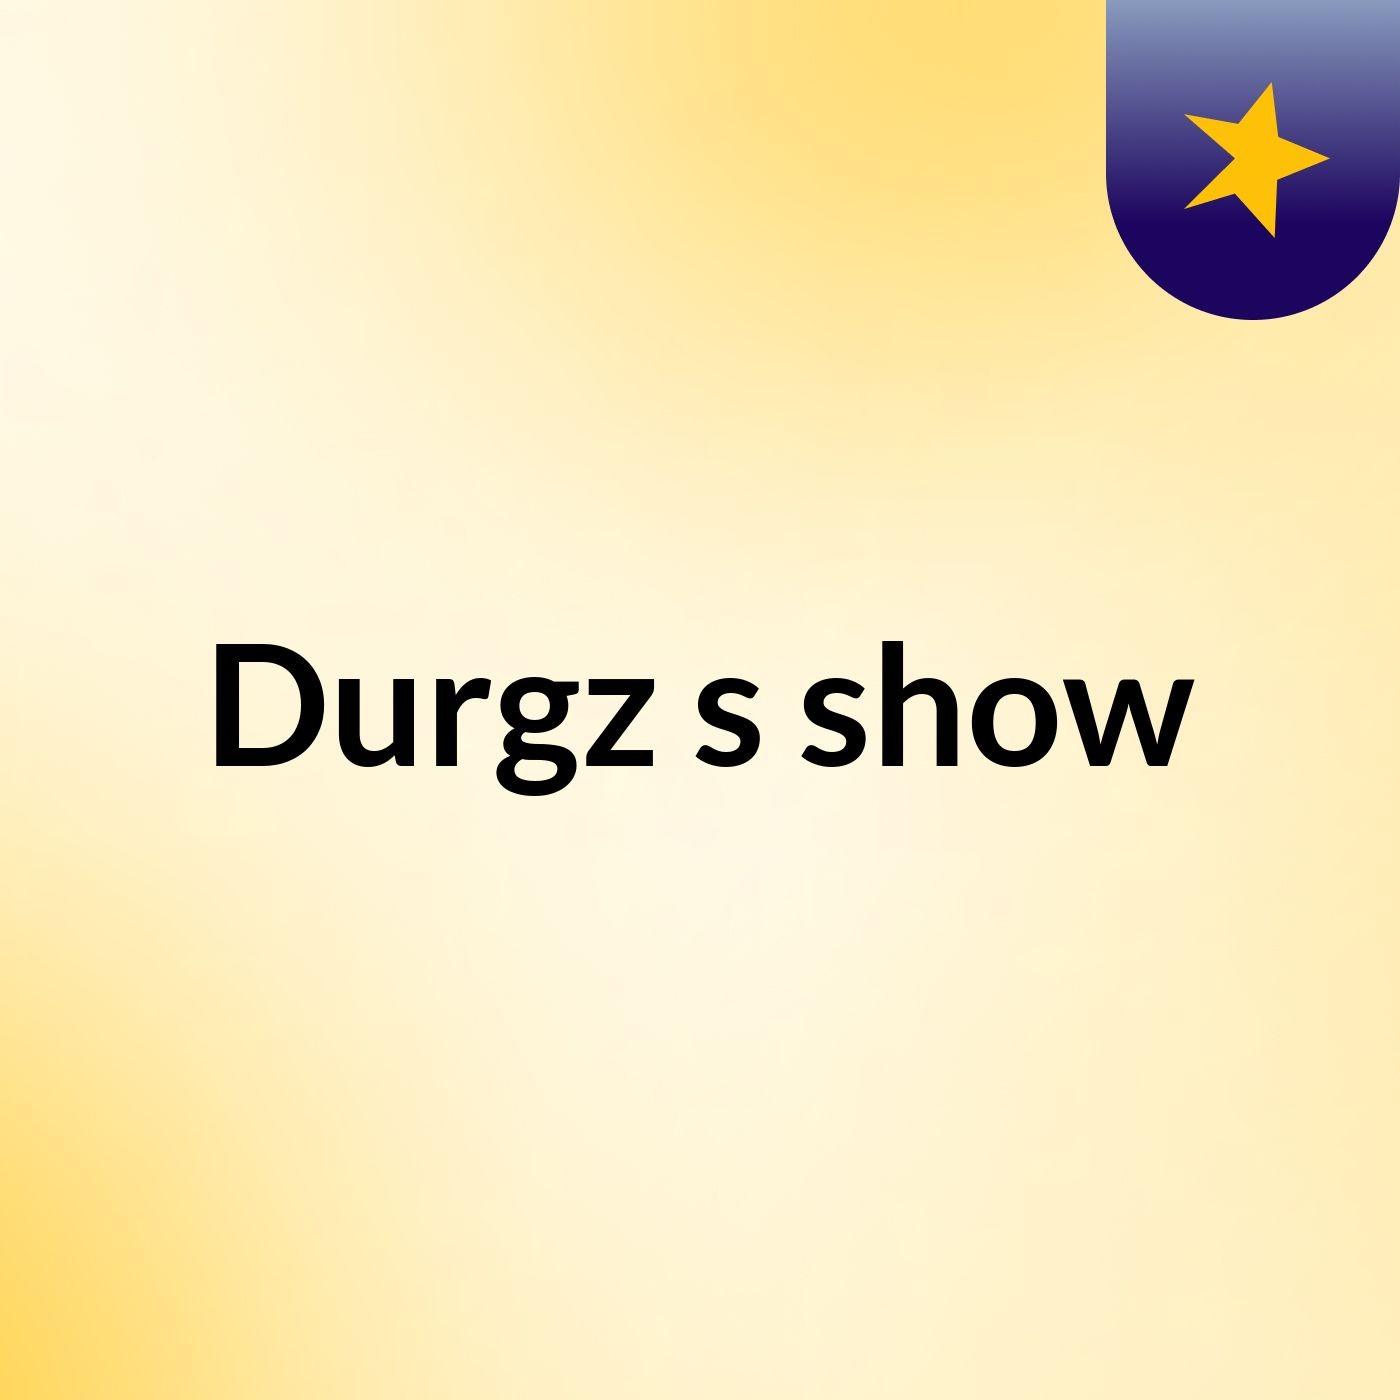 Durgz's show